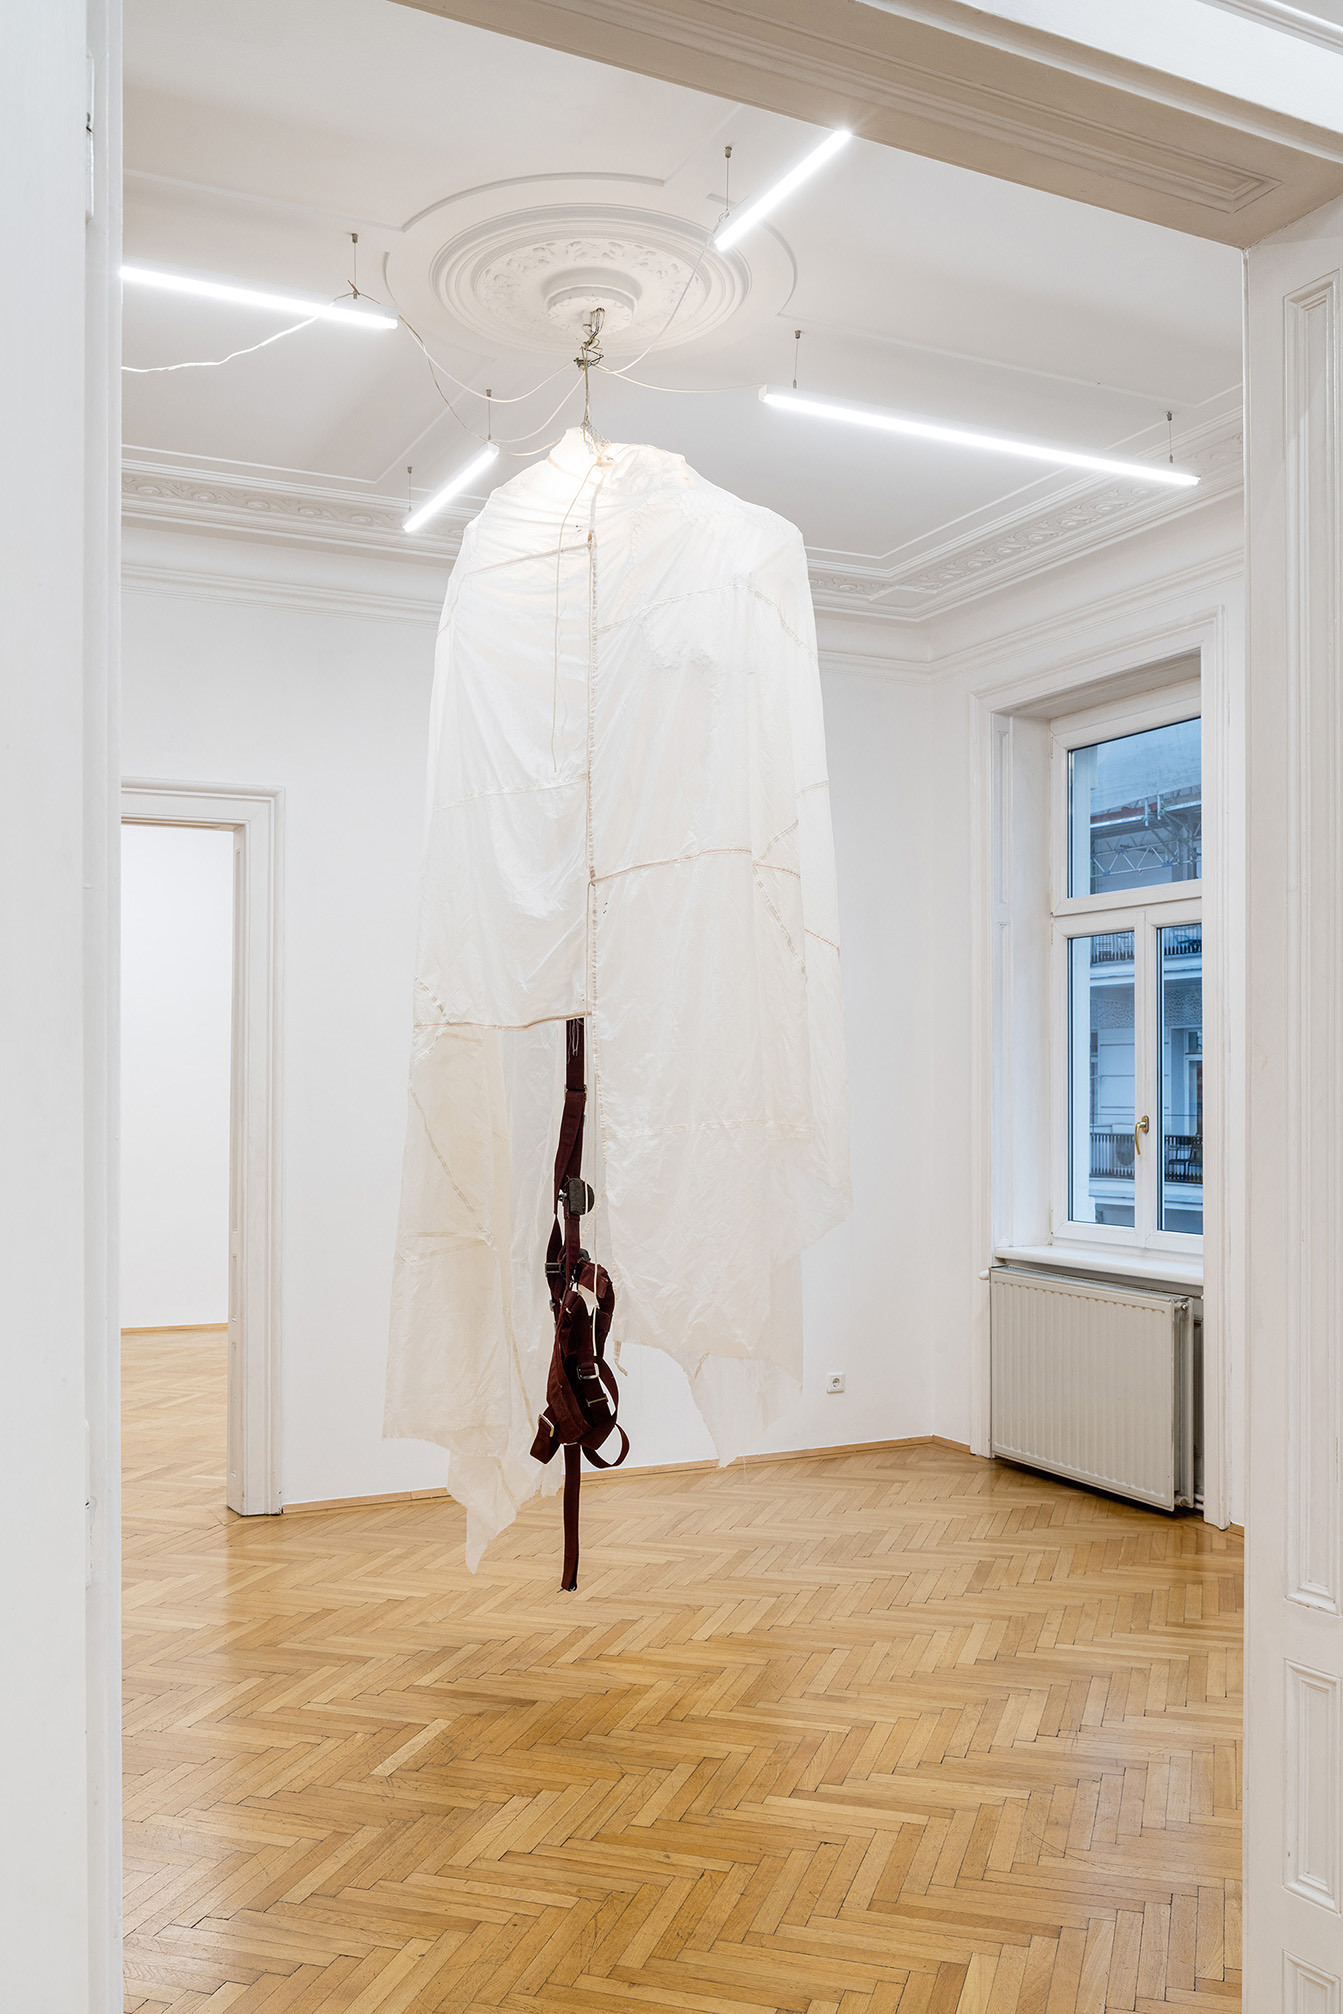 Sergio Verastegui, MÃ©duse 1, 2021, Parachute, iron grid, parachute harness, lamp, electric systemâ€¨, 255 x 107 x 107 cm, Copyright: Simon Veres, Courtesy of the Artist + ZVA